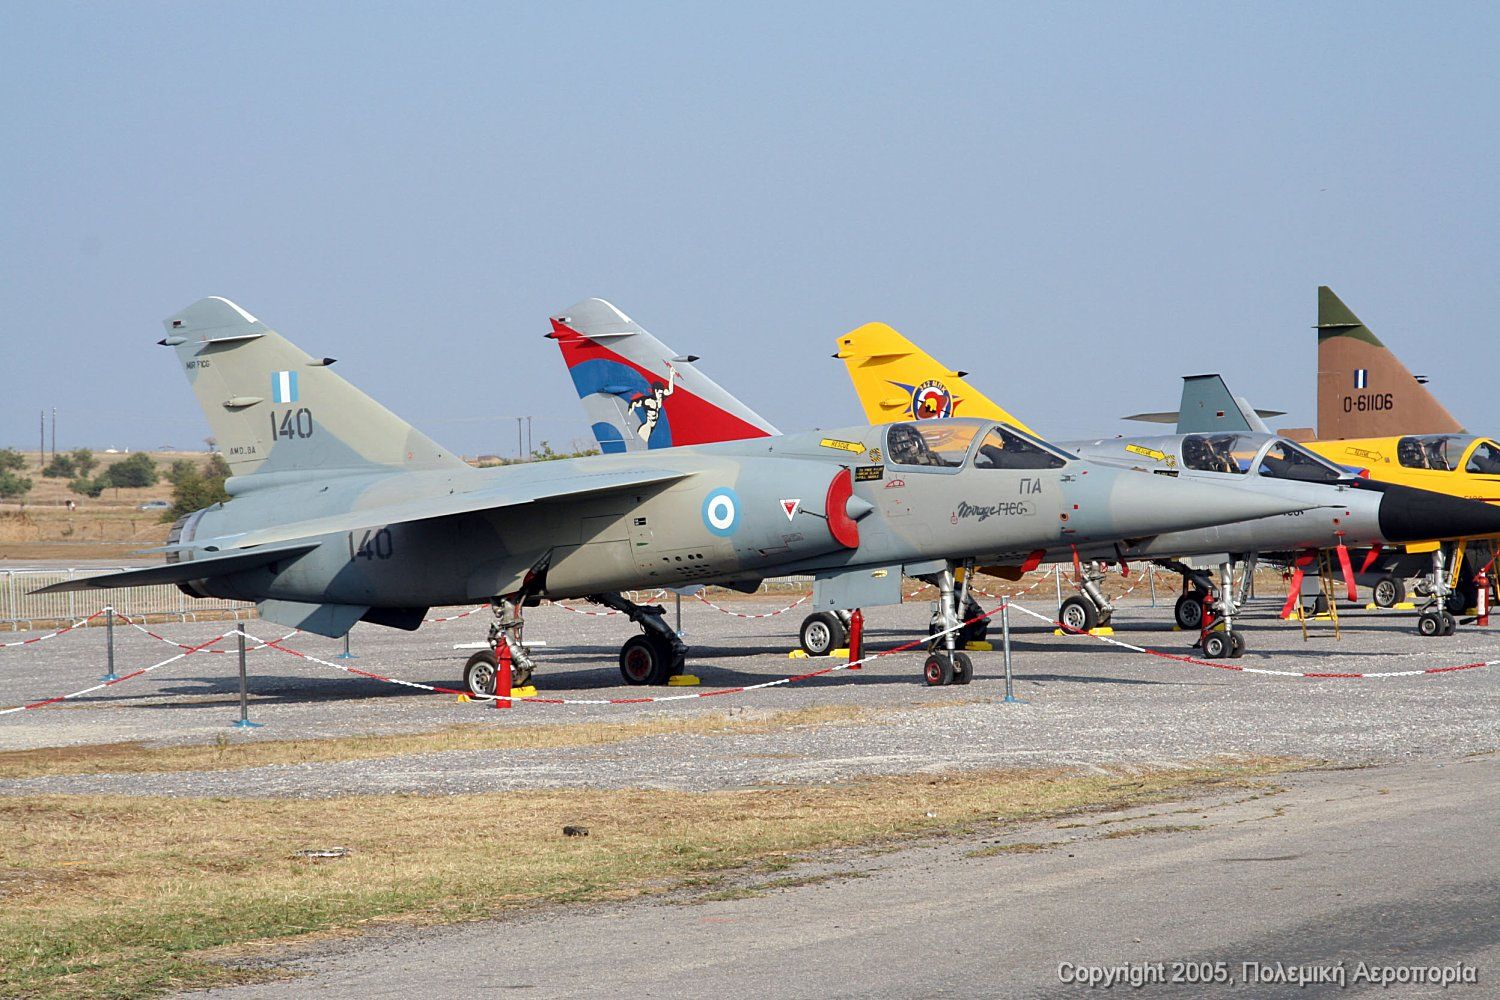 Mirage F1 'ghost' camo